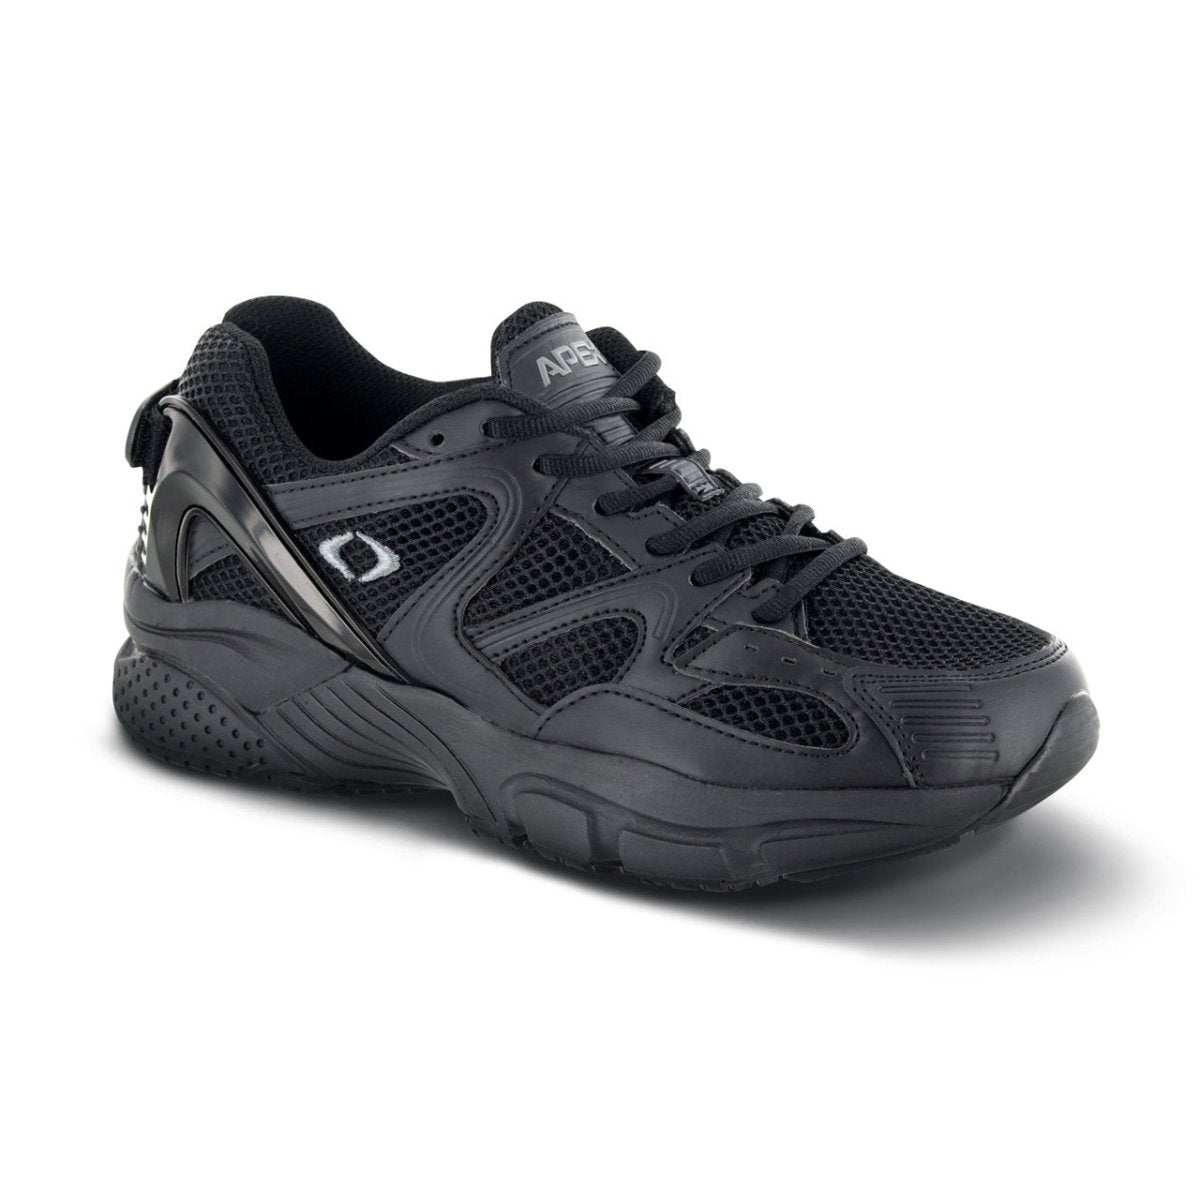 APEX X520M BOSS RUNNER MEN'S ACTIVE SHOE IN BLACK - TLW Shoes